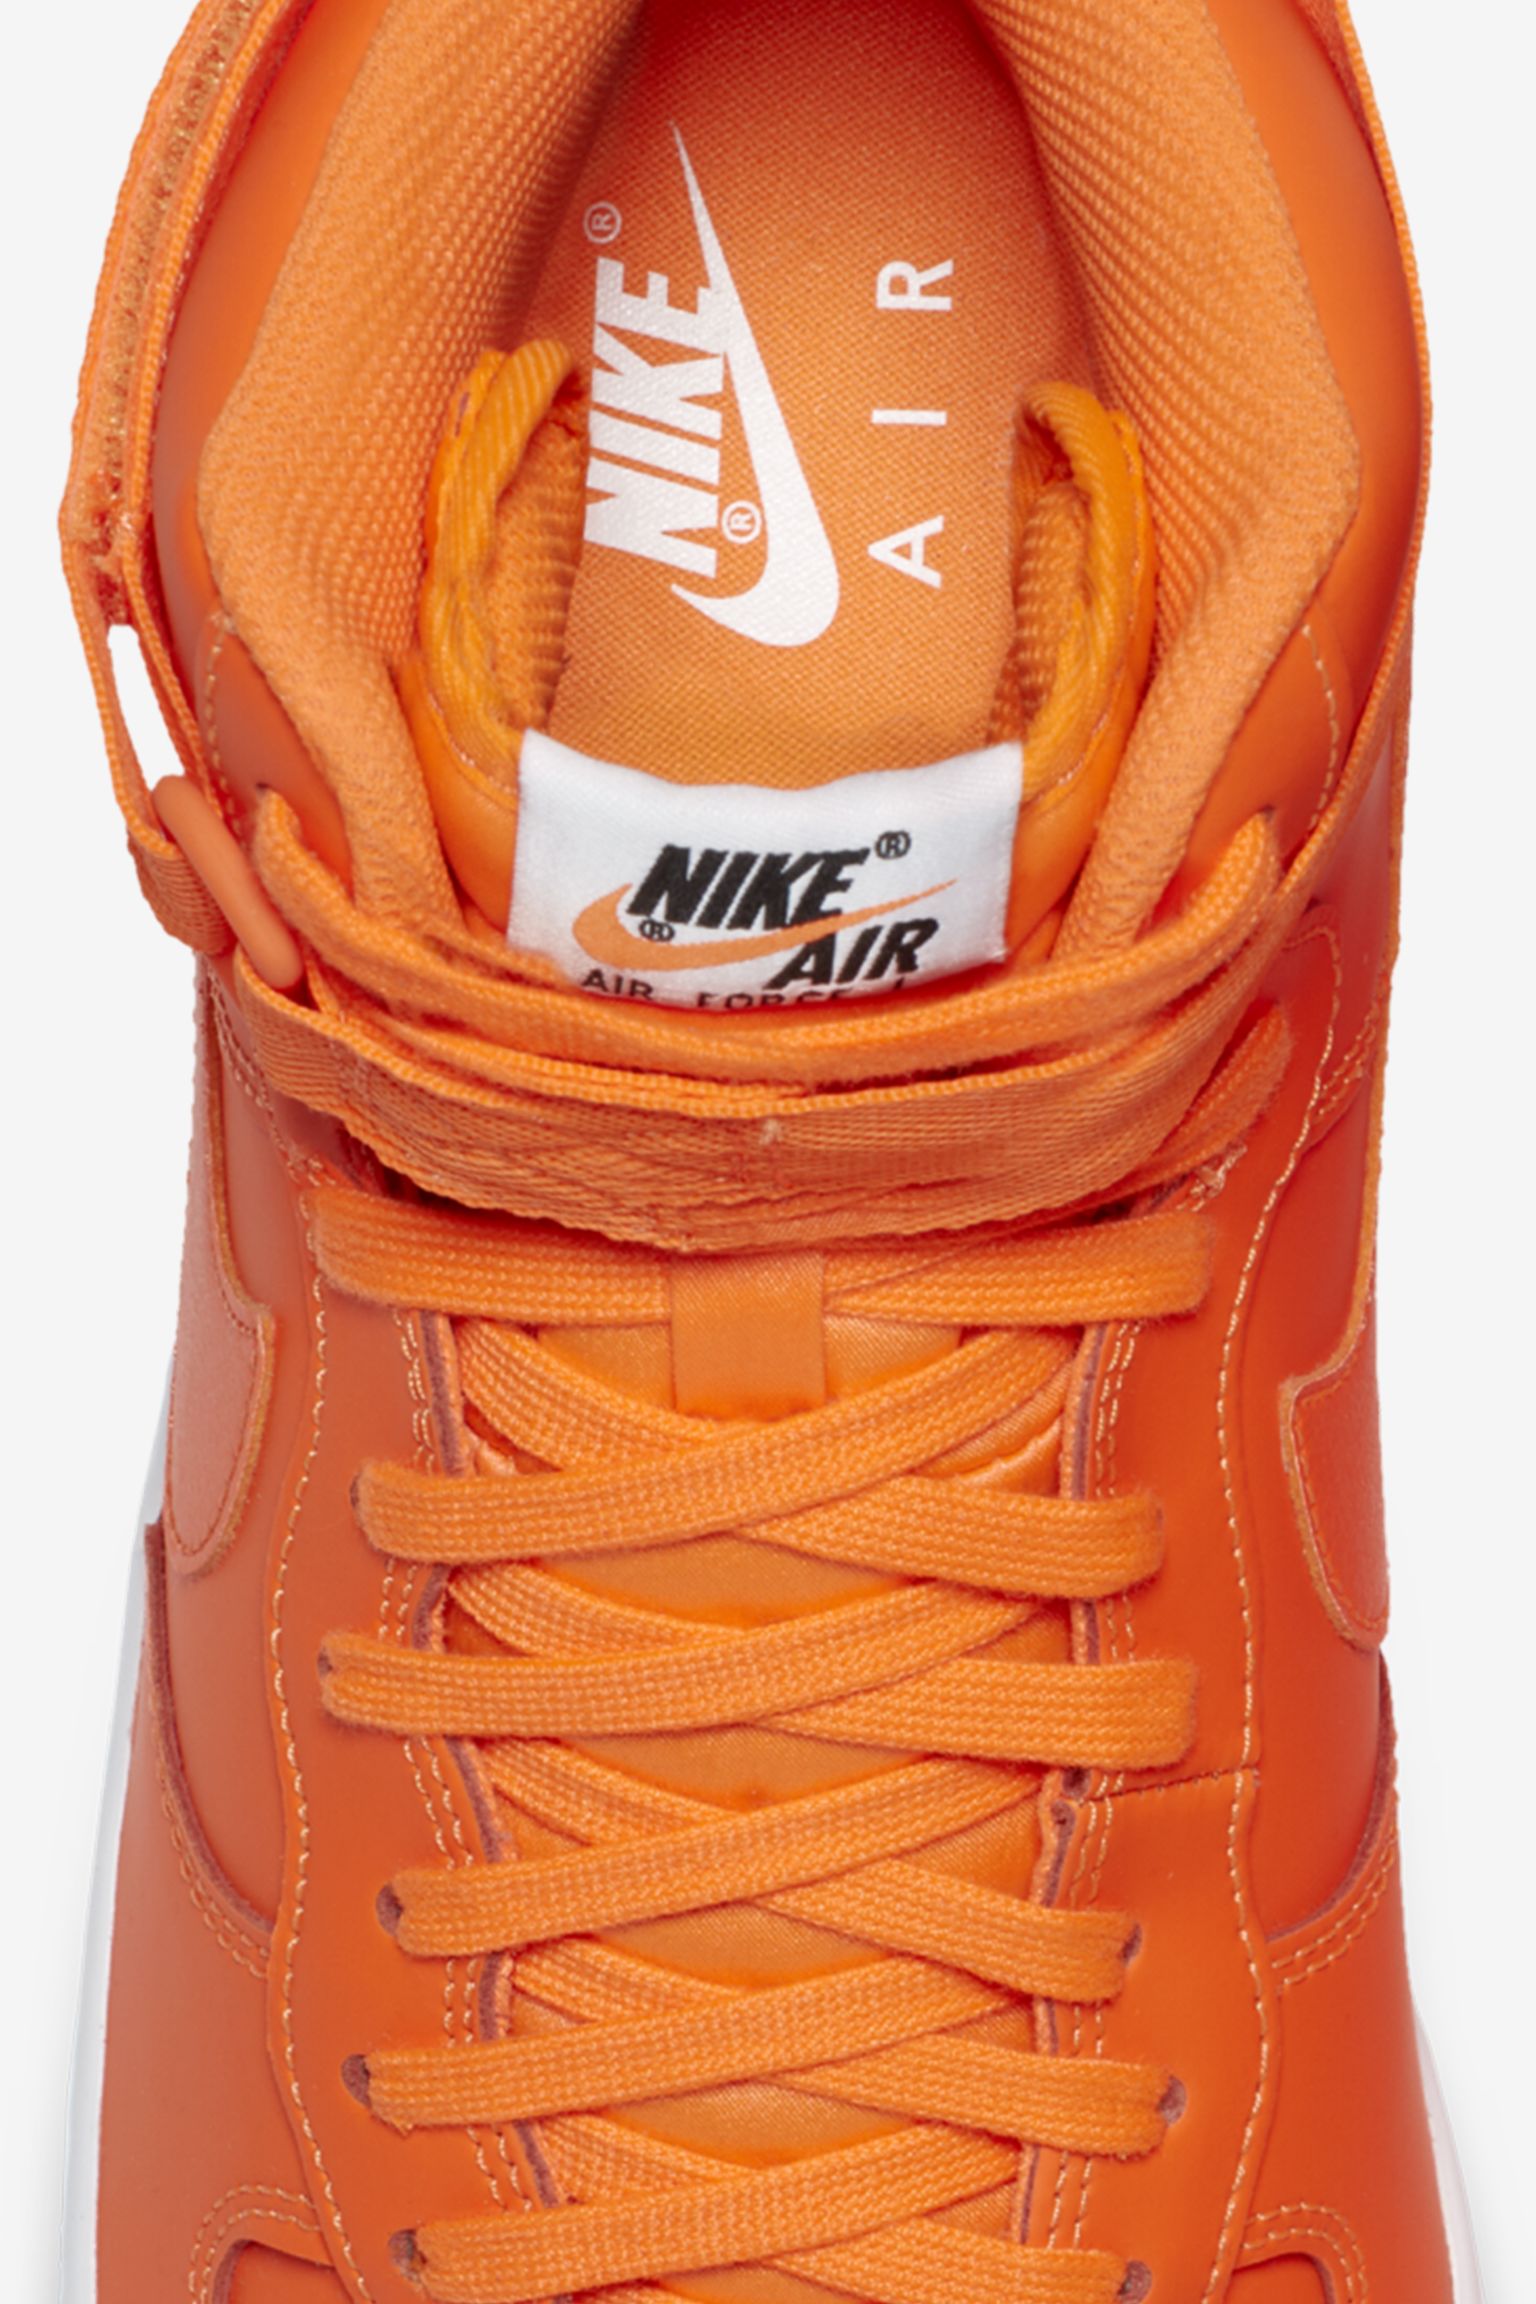 Enlighten etik Alert Nike Air Force 1 High JDI Collection 'Total Orange & White' Release Date.  Nike SNKRS